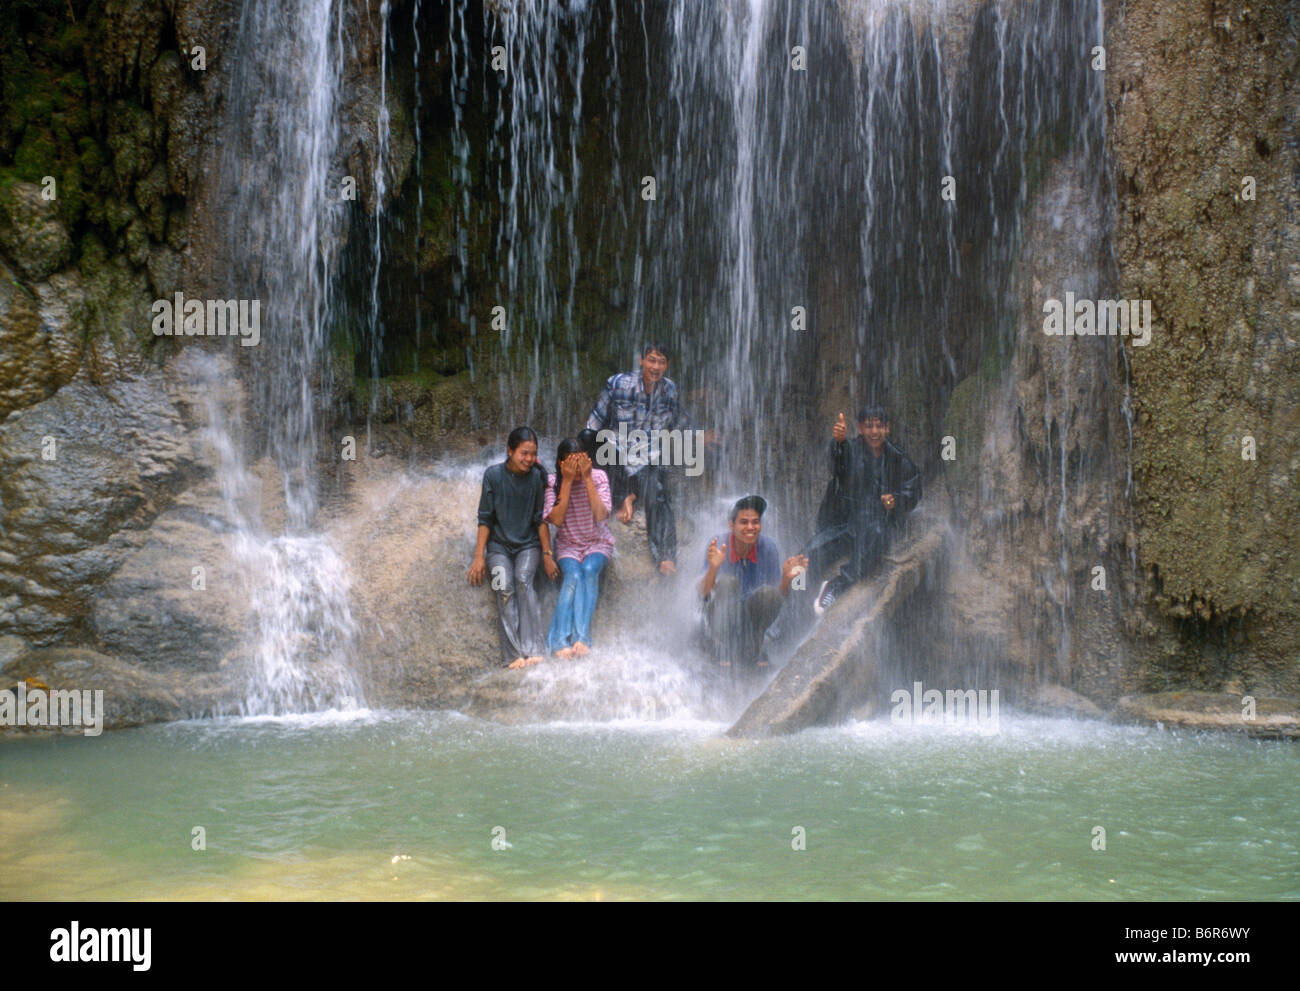 Young laotic people taking a shower under the Tat Kuang Xi waterfall Jugendliche Laoten am Wasserfall Laos Stock Photo